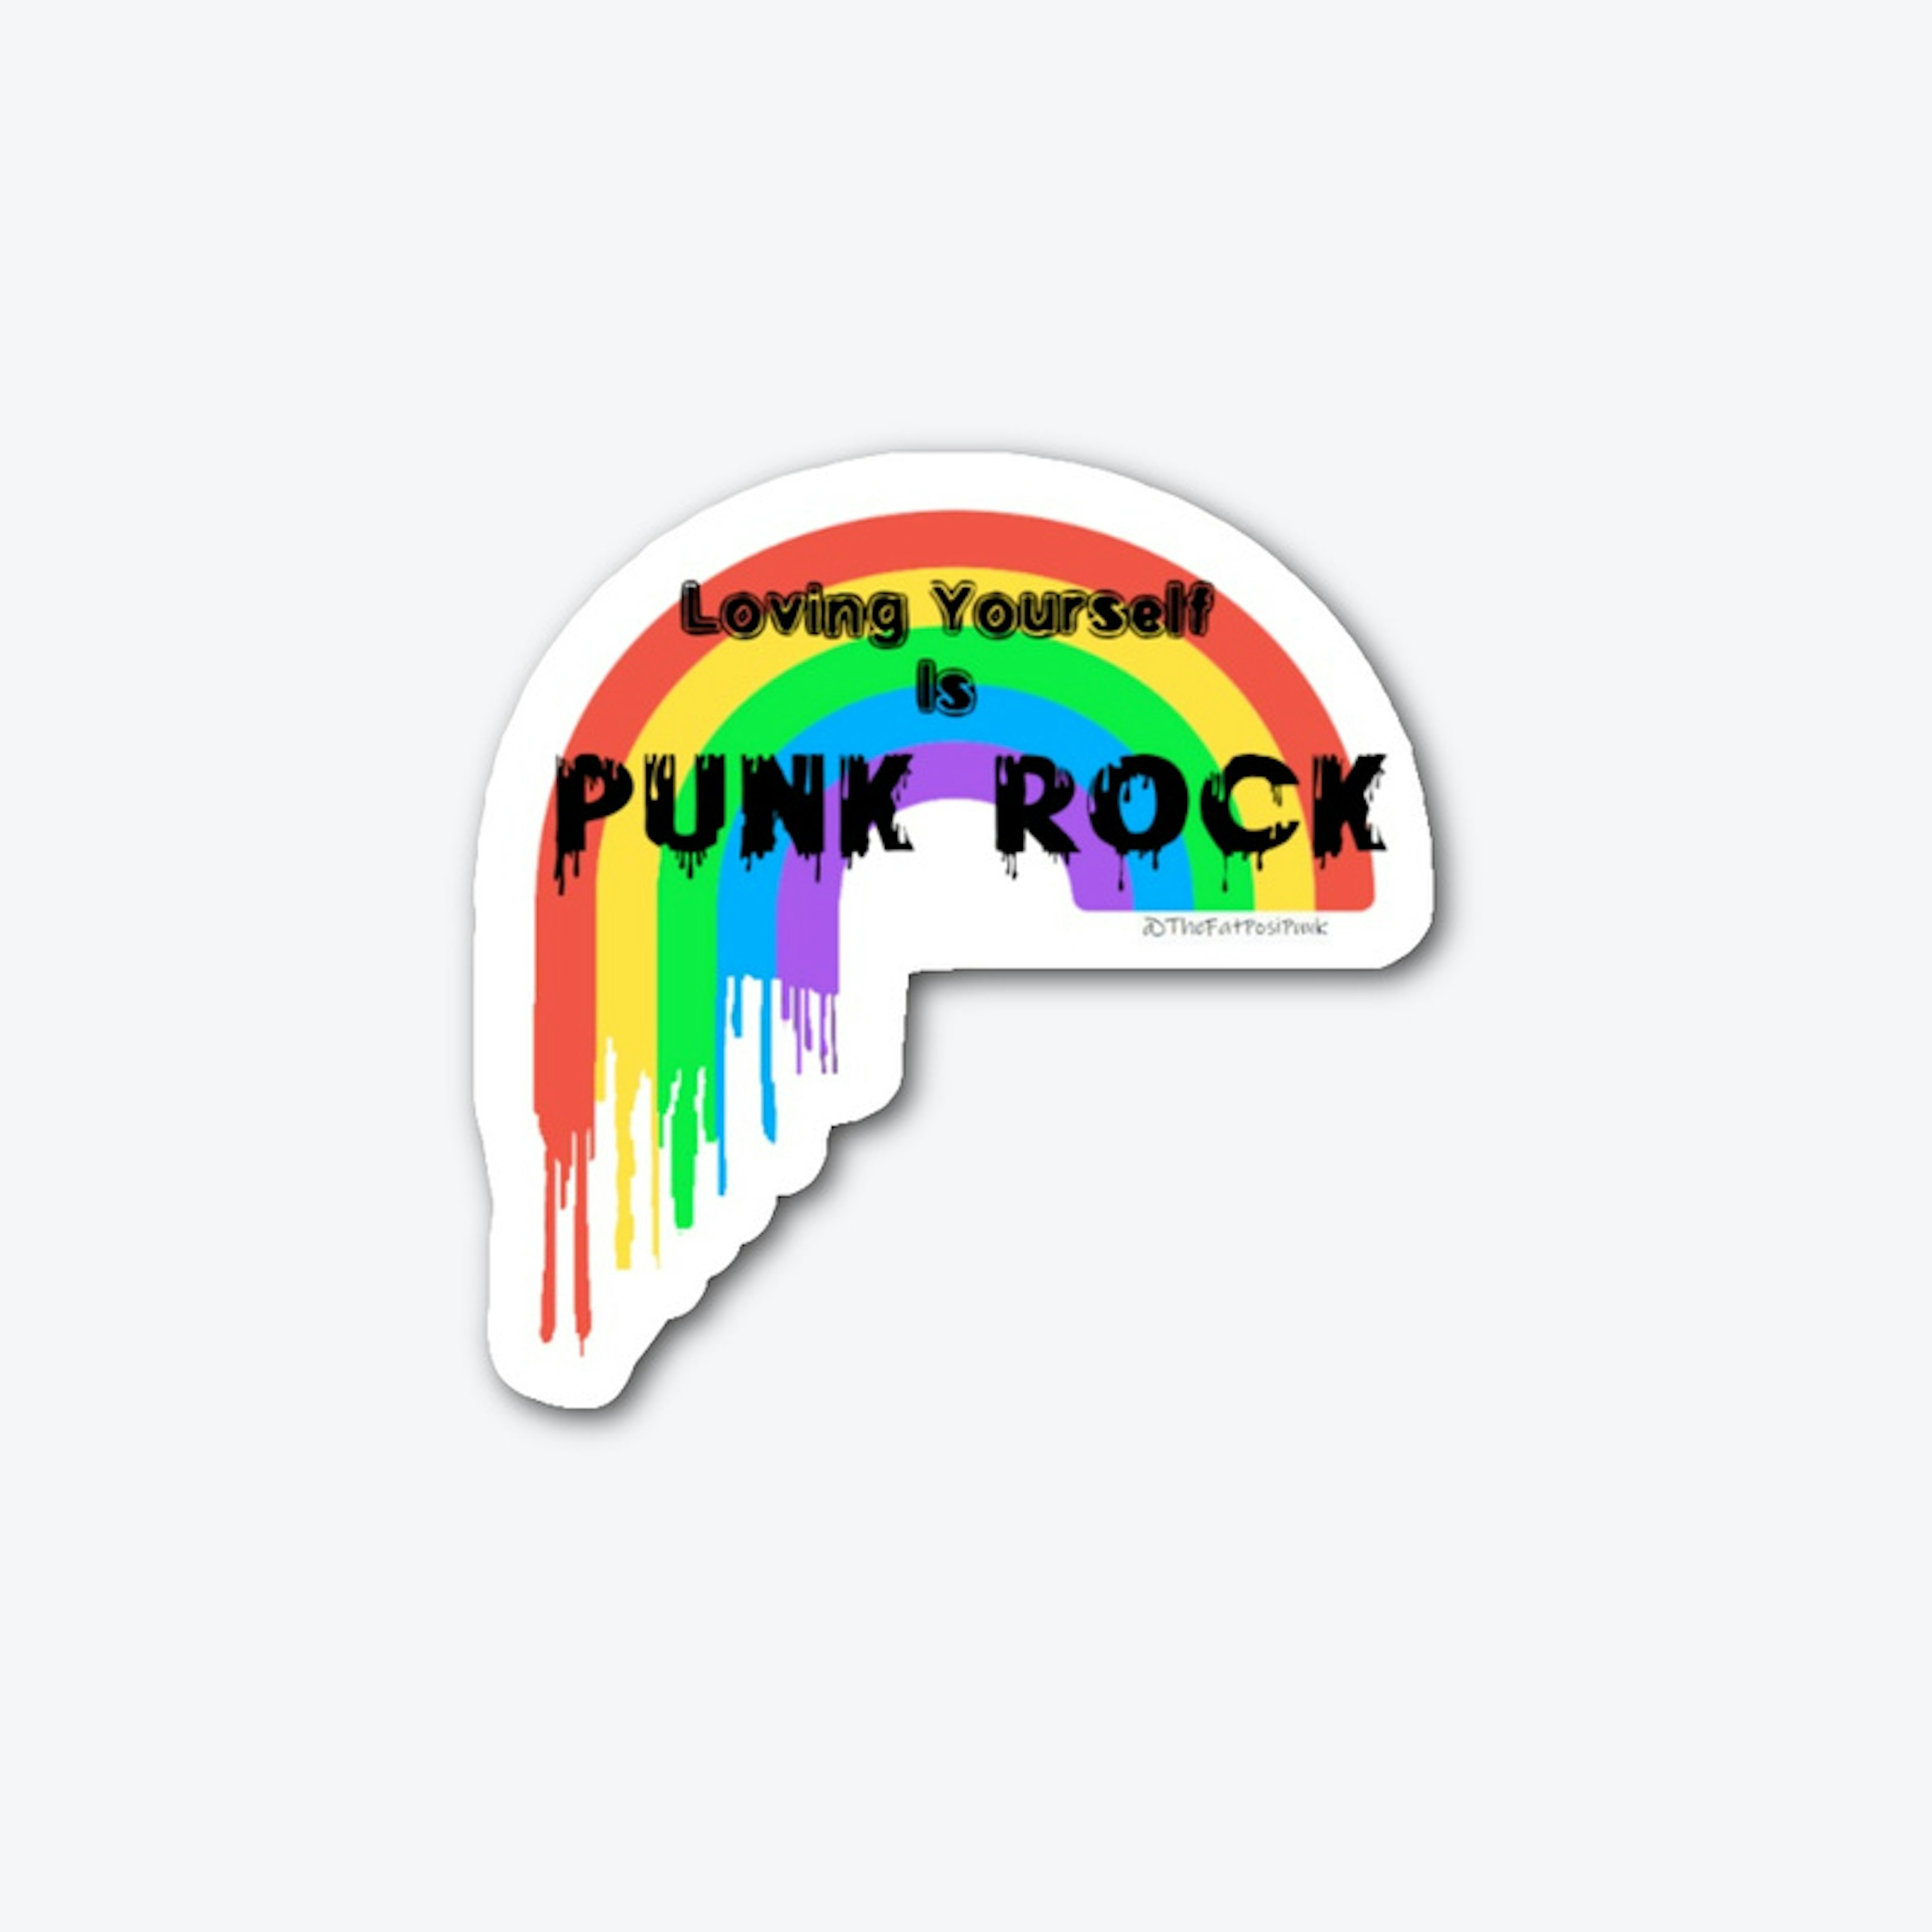 Loving Yourself is Punk Rock